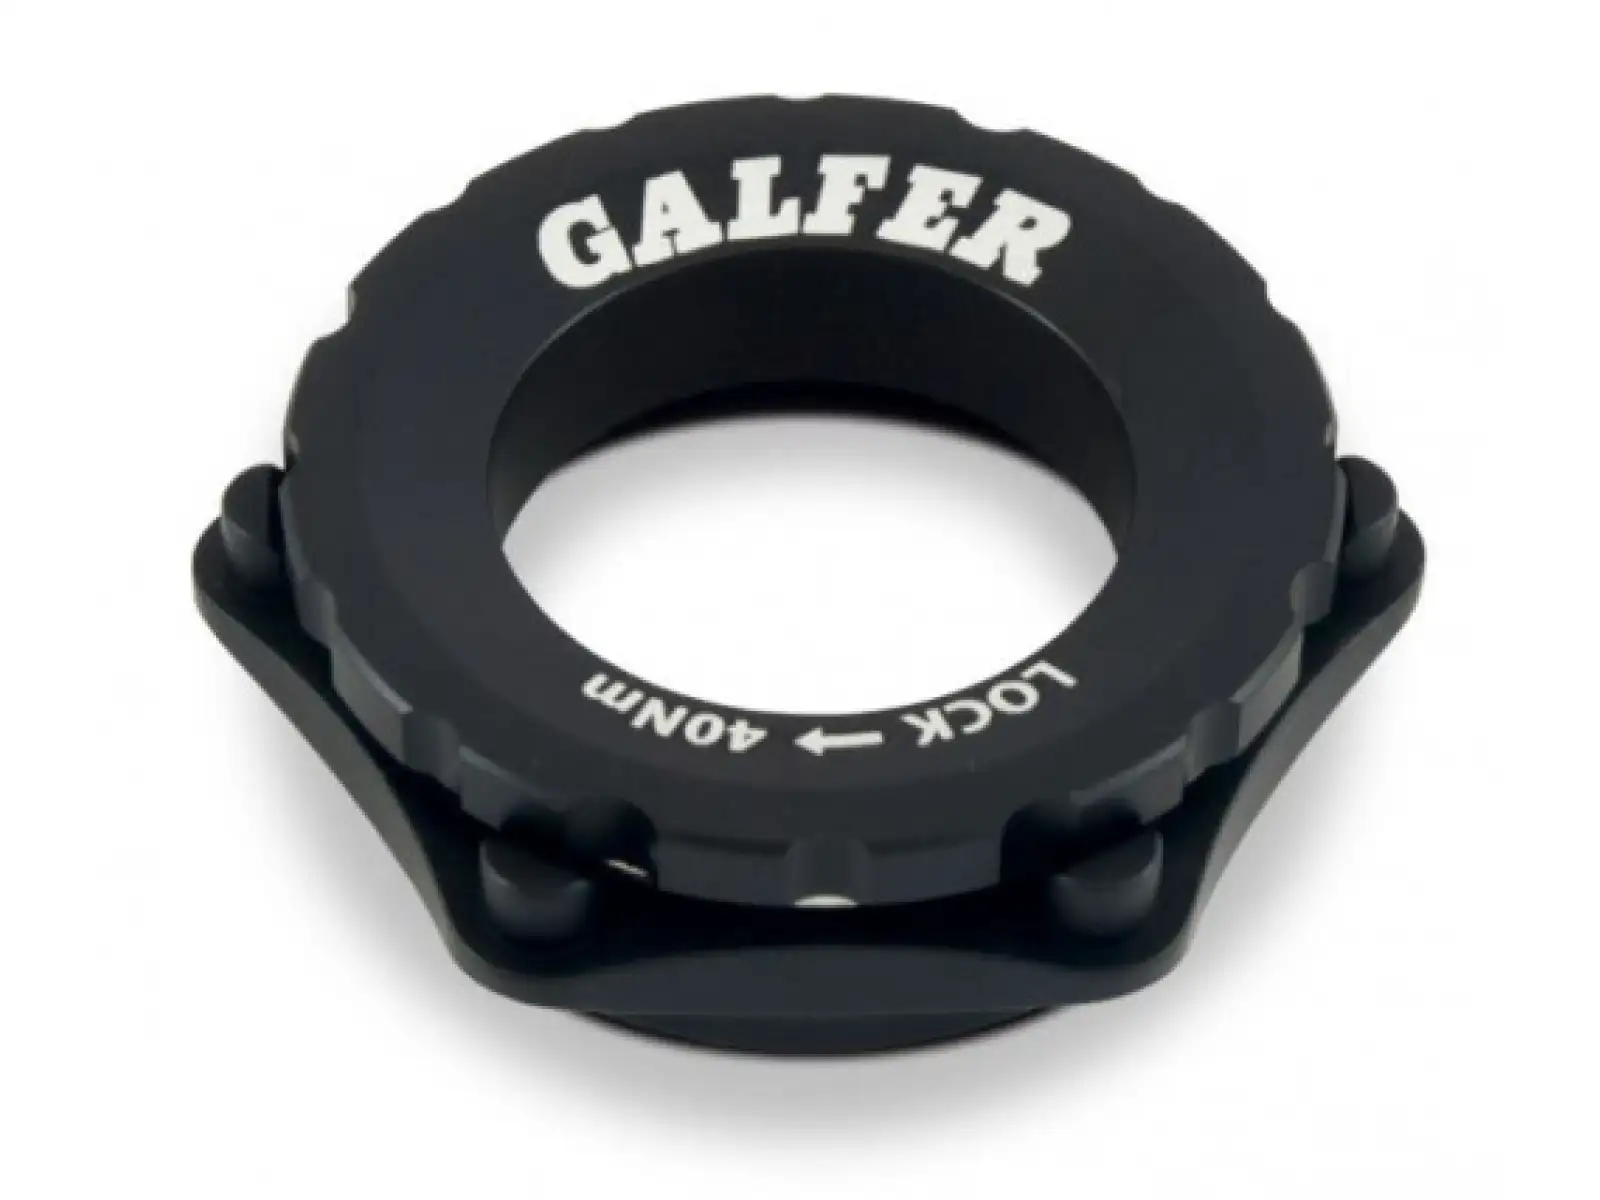 Galfer CB001 adaptér z CenterLock na 6 děr